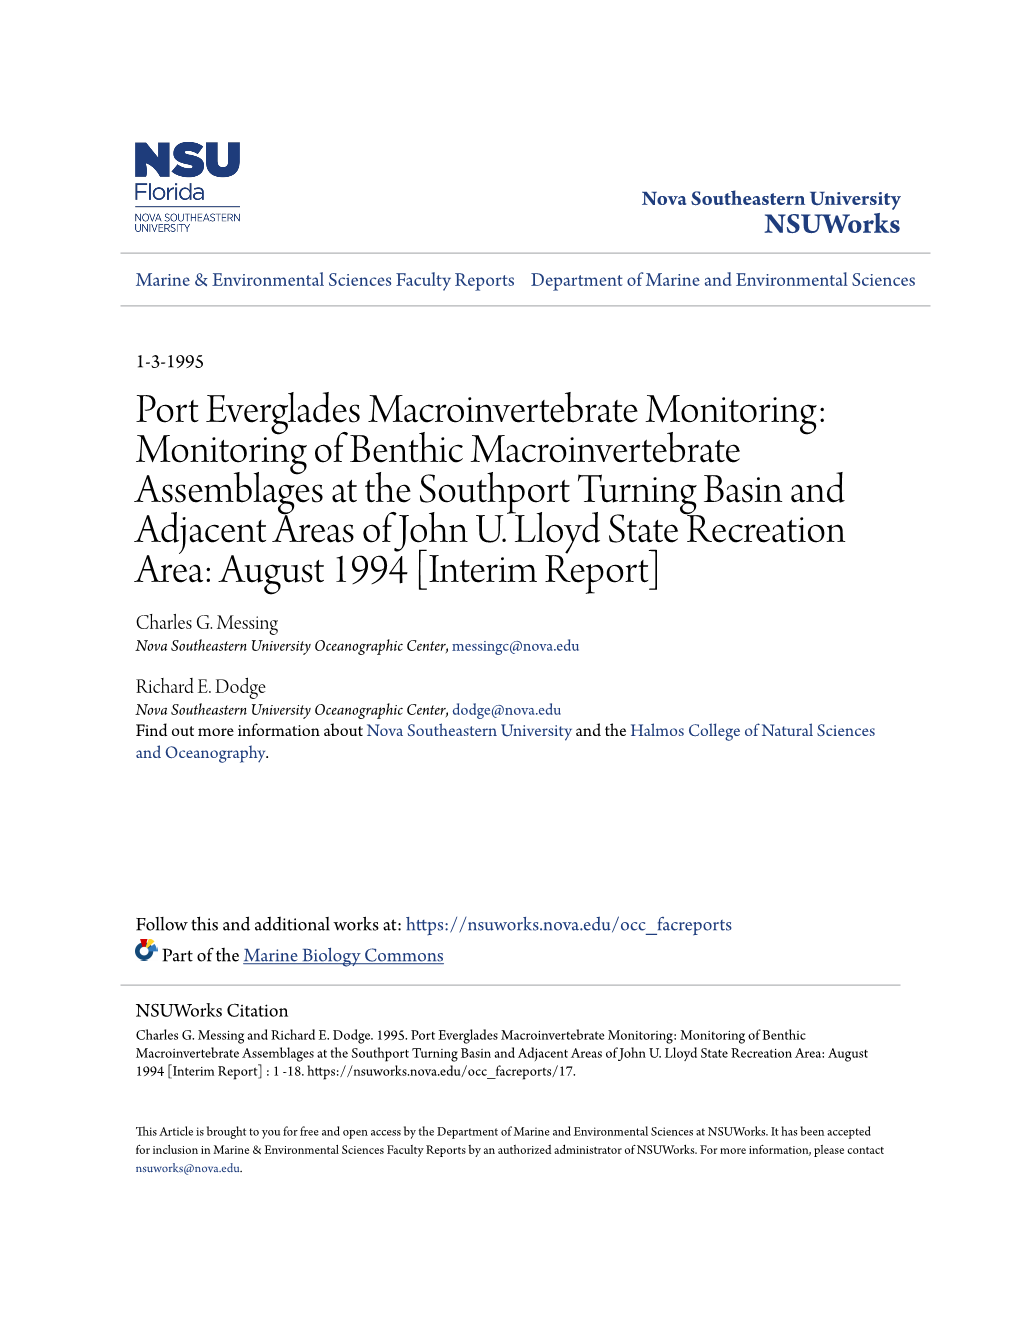 Port Everglades Macroinvertebrate Monitoring: Monitoring of Benthic Macroinvertebrate Assemblages at the Southport Turning Basin and Adjacent Areas of John U